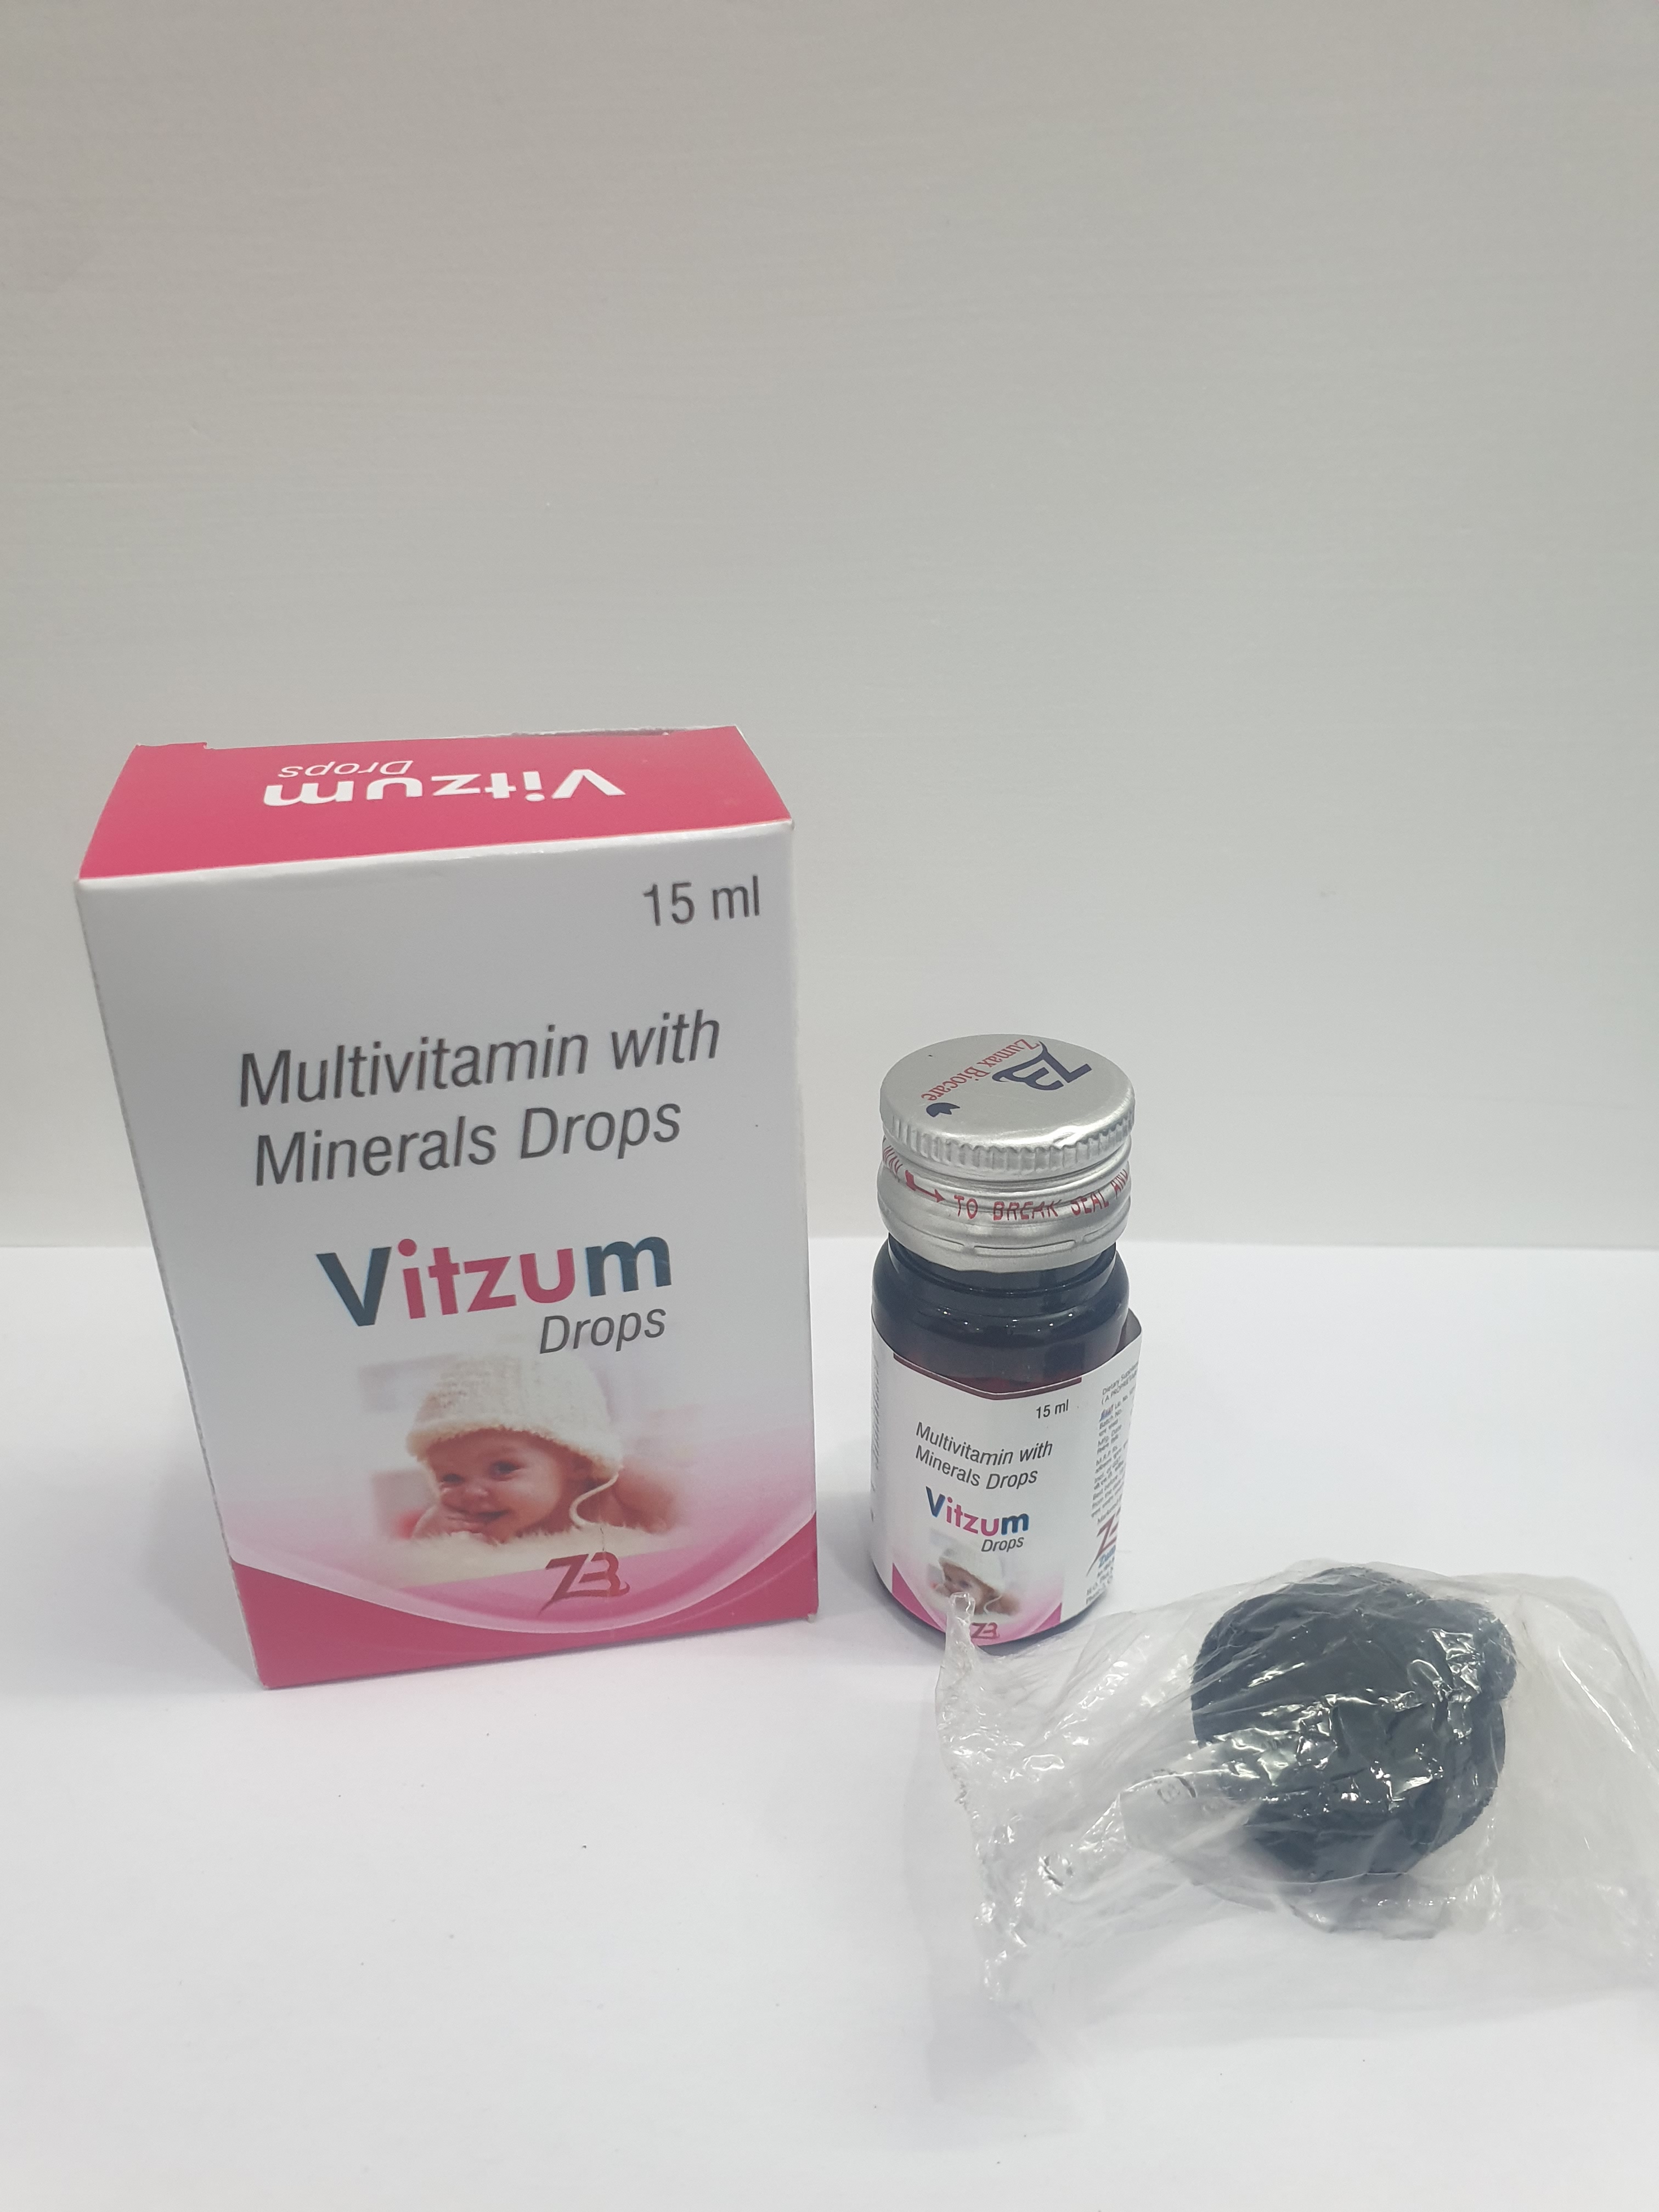 Product Name: Vitzum Drops, Compositions of Multivitamin with Minerals Drops are Multivitamin with Minerals Drops - Zumax Biocare